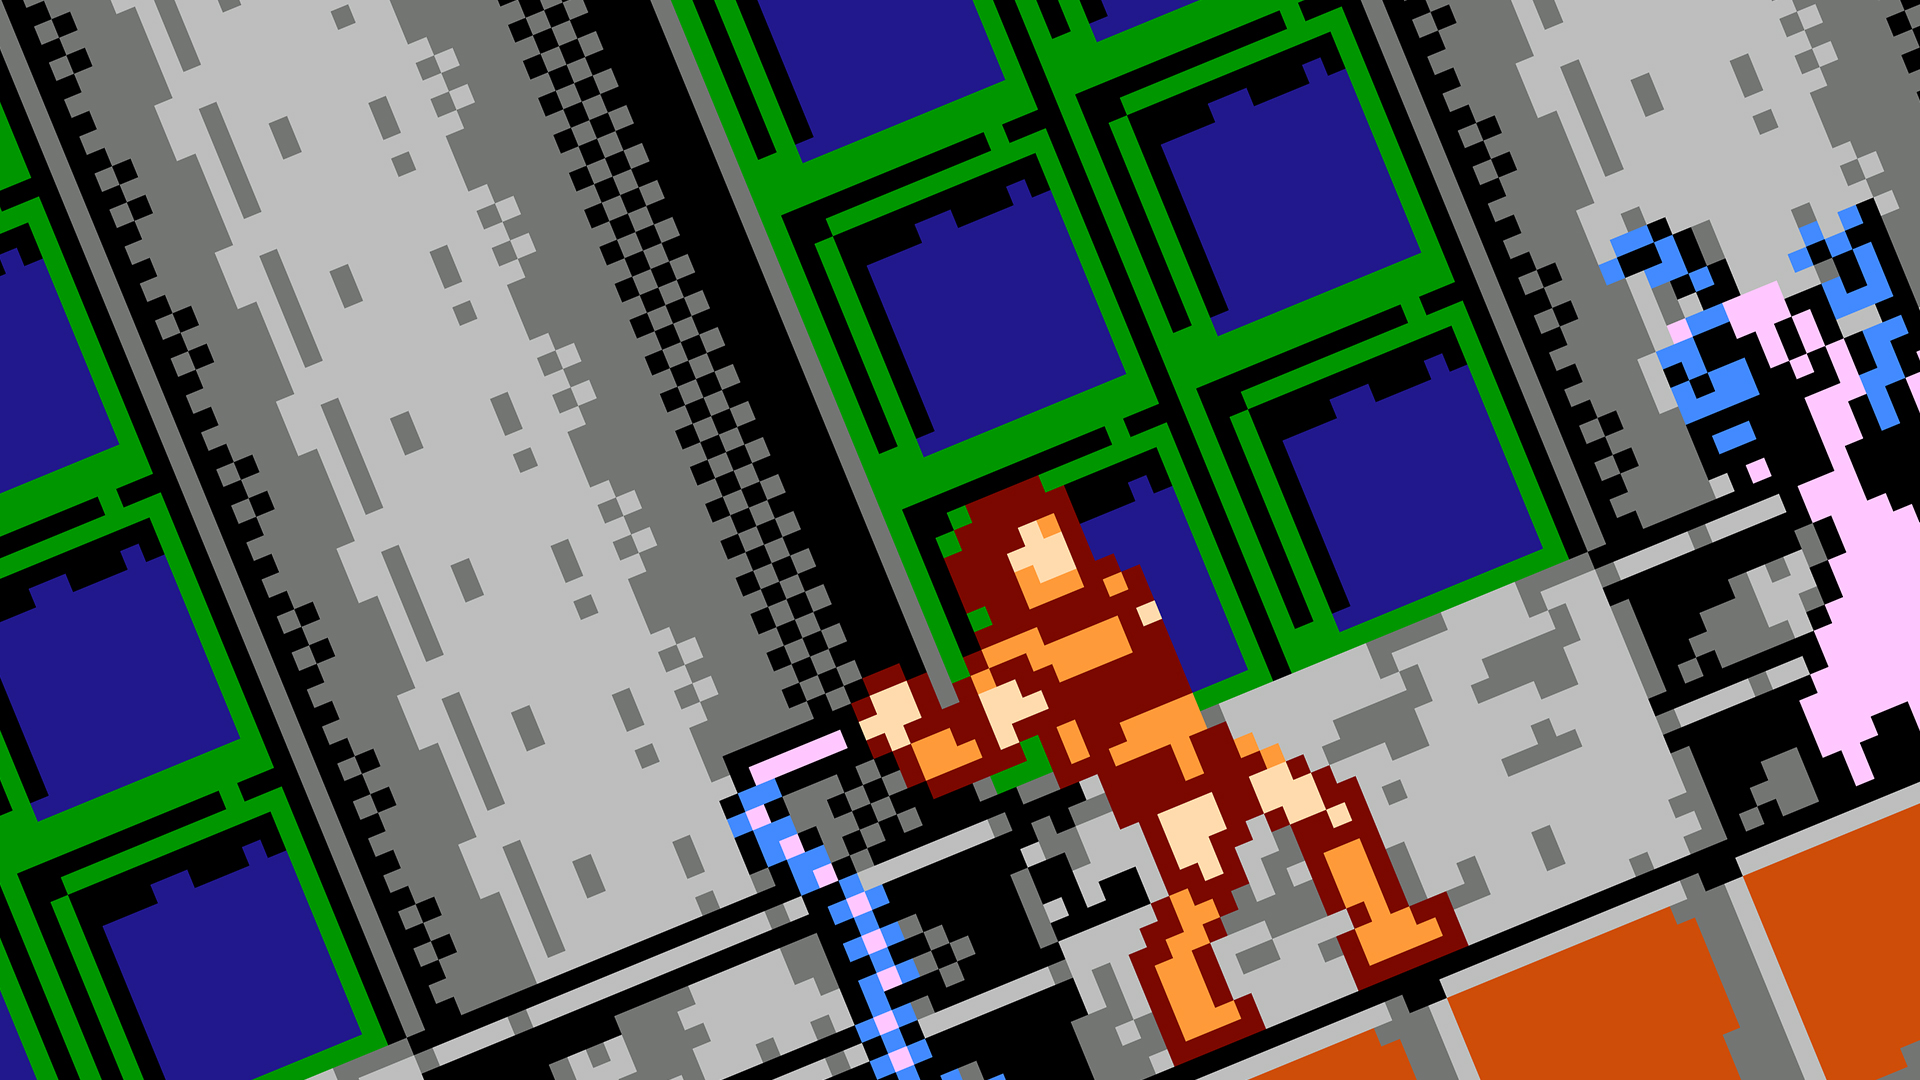 General 1920x1080 Castlevania Nintendo Entertainment System retro games video game art pixel art screen shot